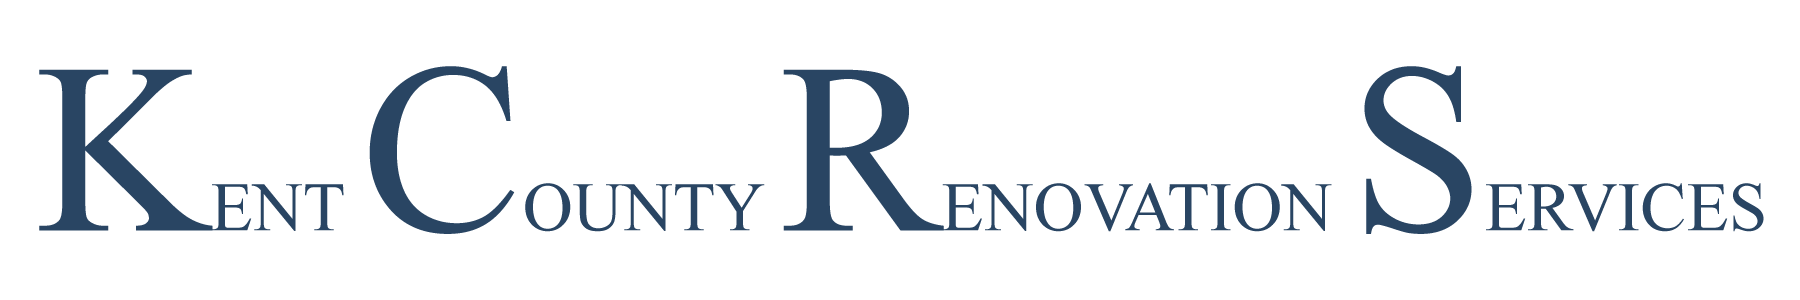 Kent County Renovation Services - Logo